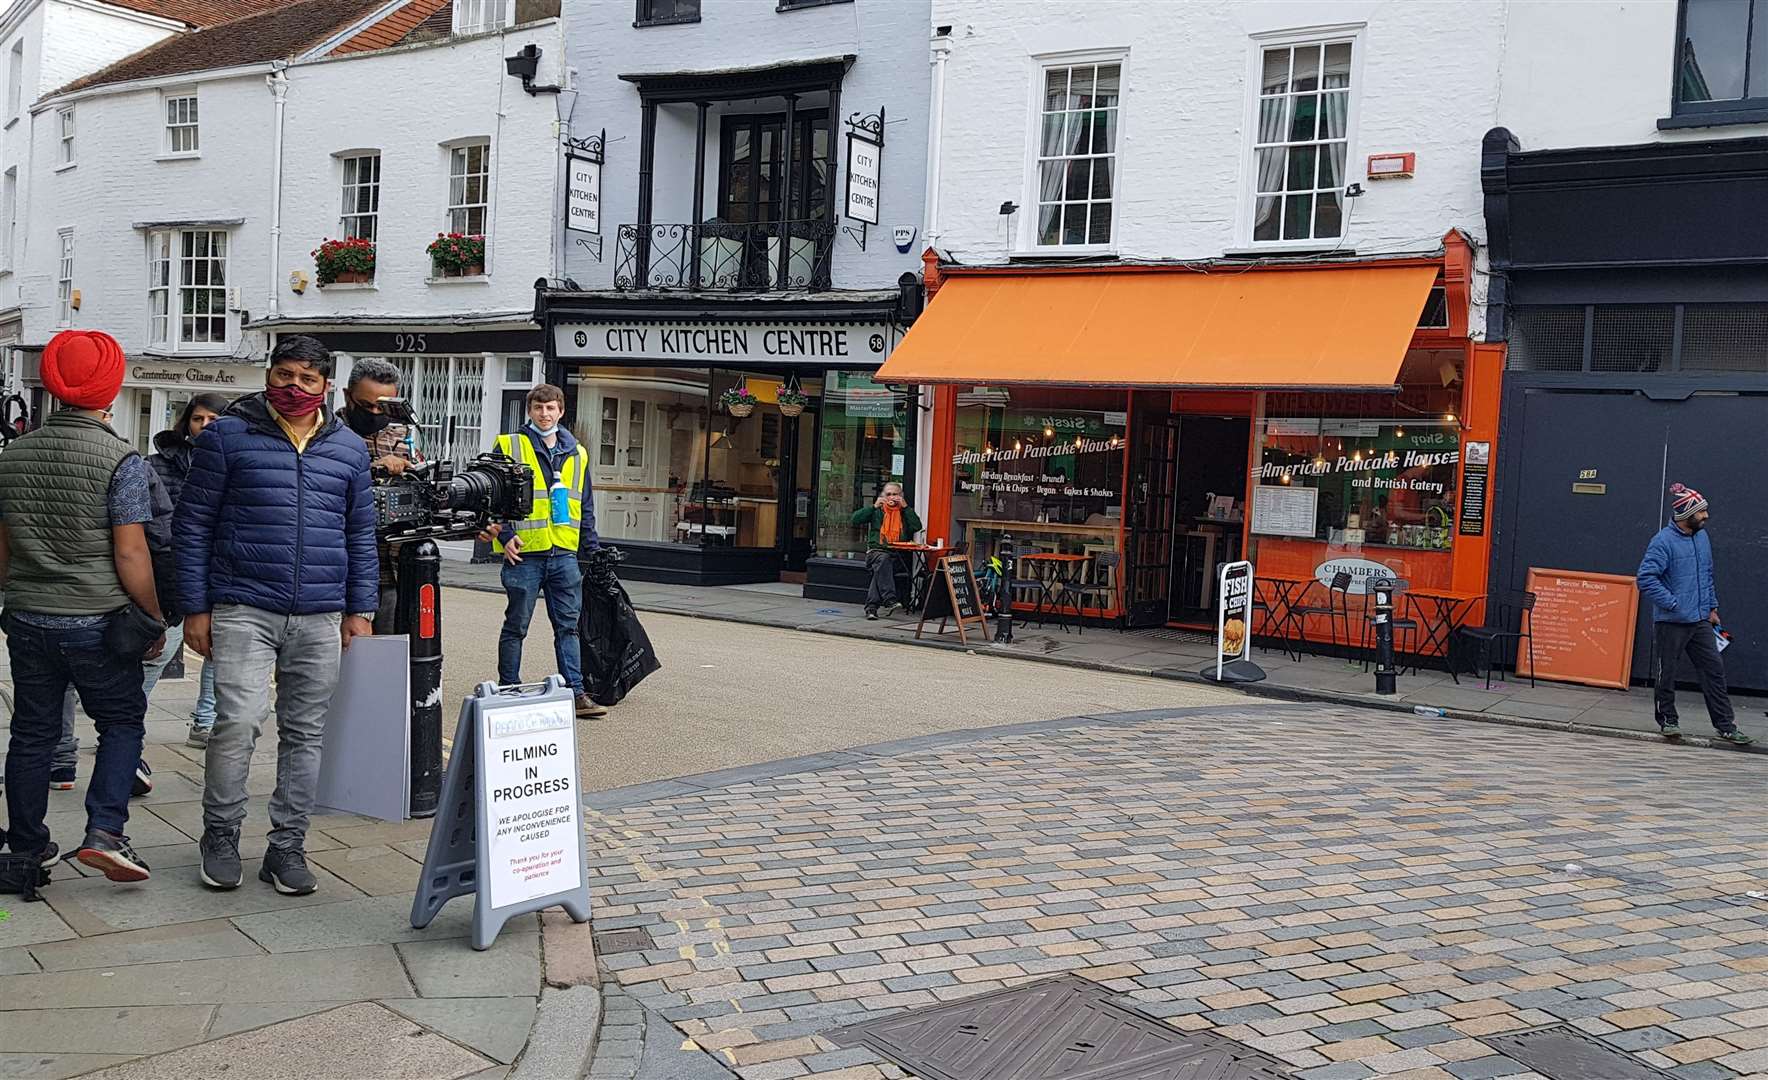 Crews are filming in Canterbury city centre around Sun Street